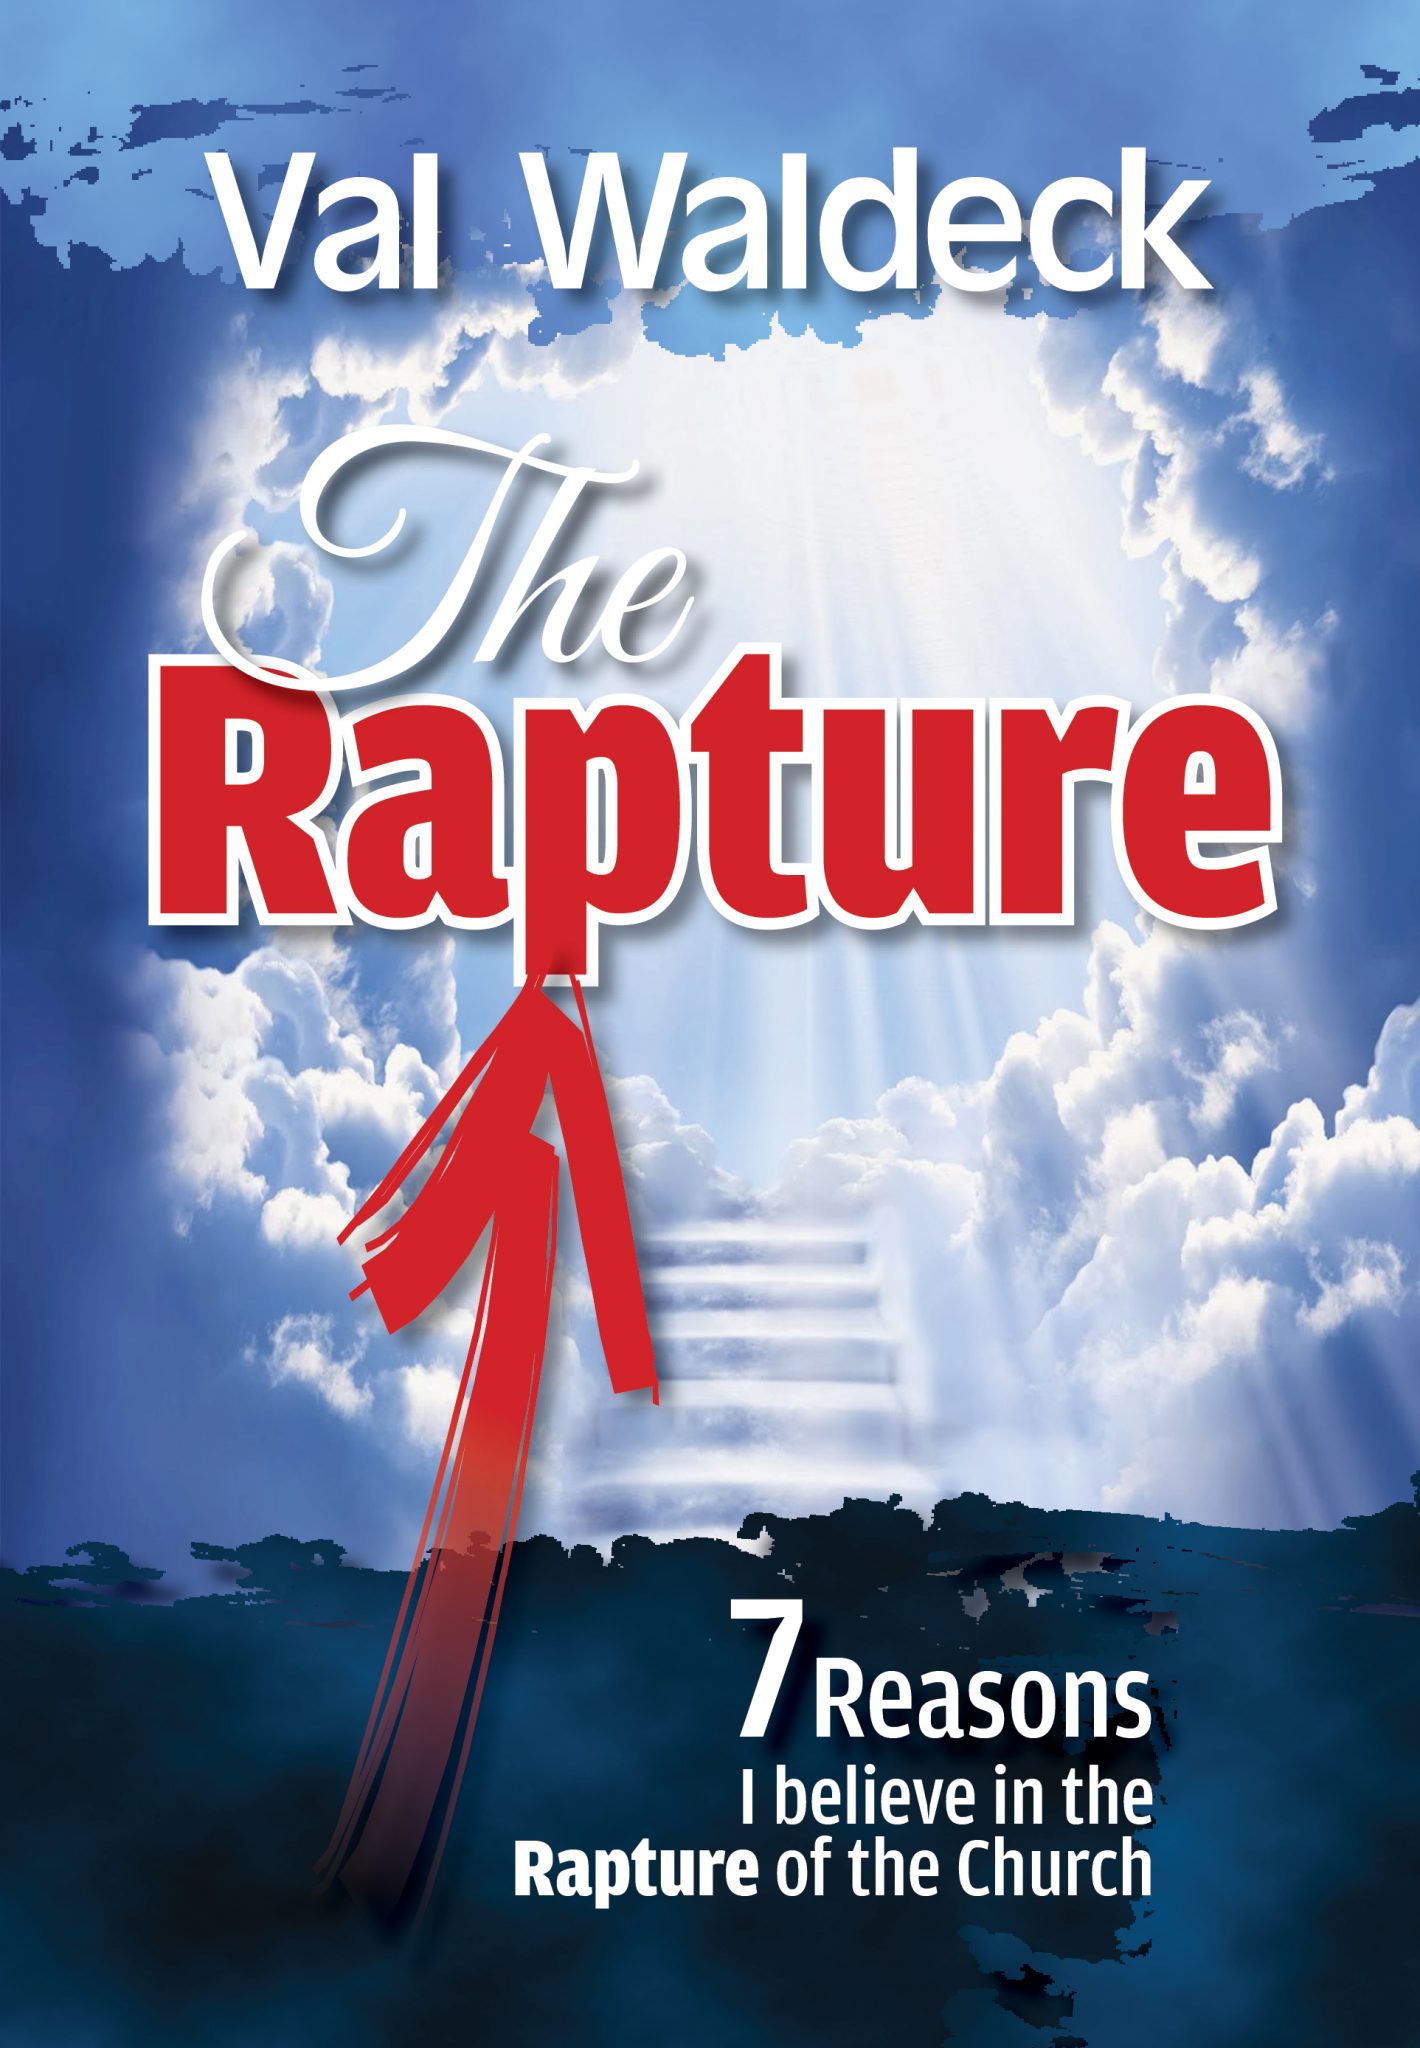 rapture bible study for kids